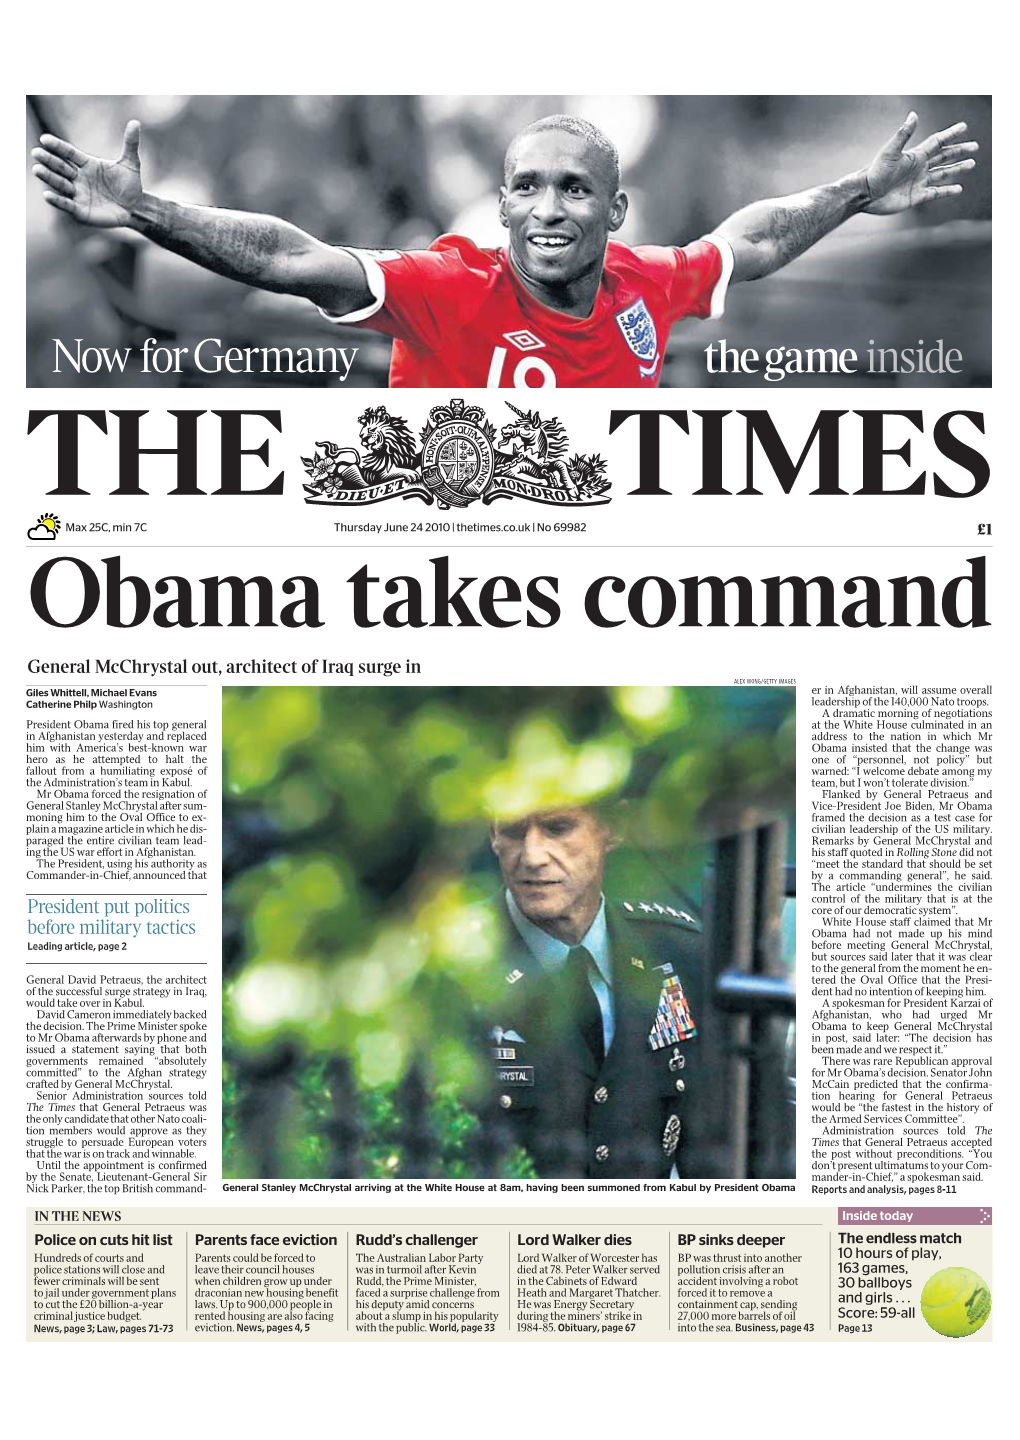 Obama Takes Command